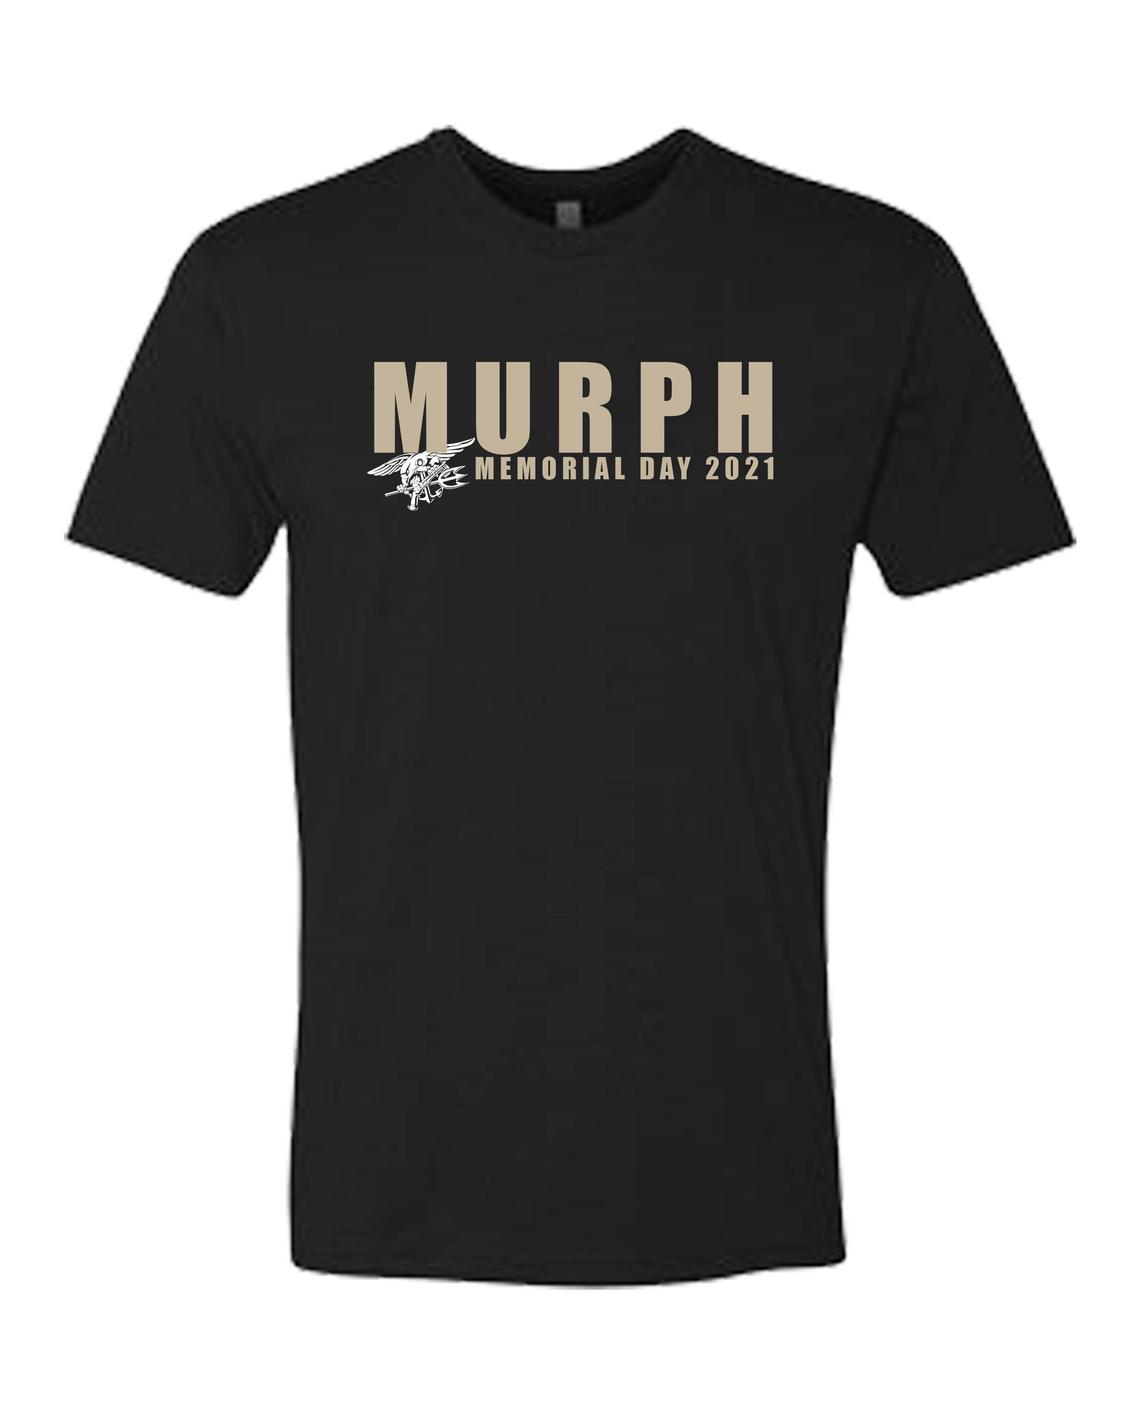 Murph 2021 Shirt